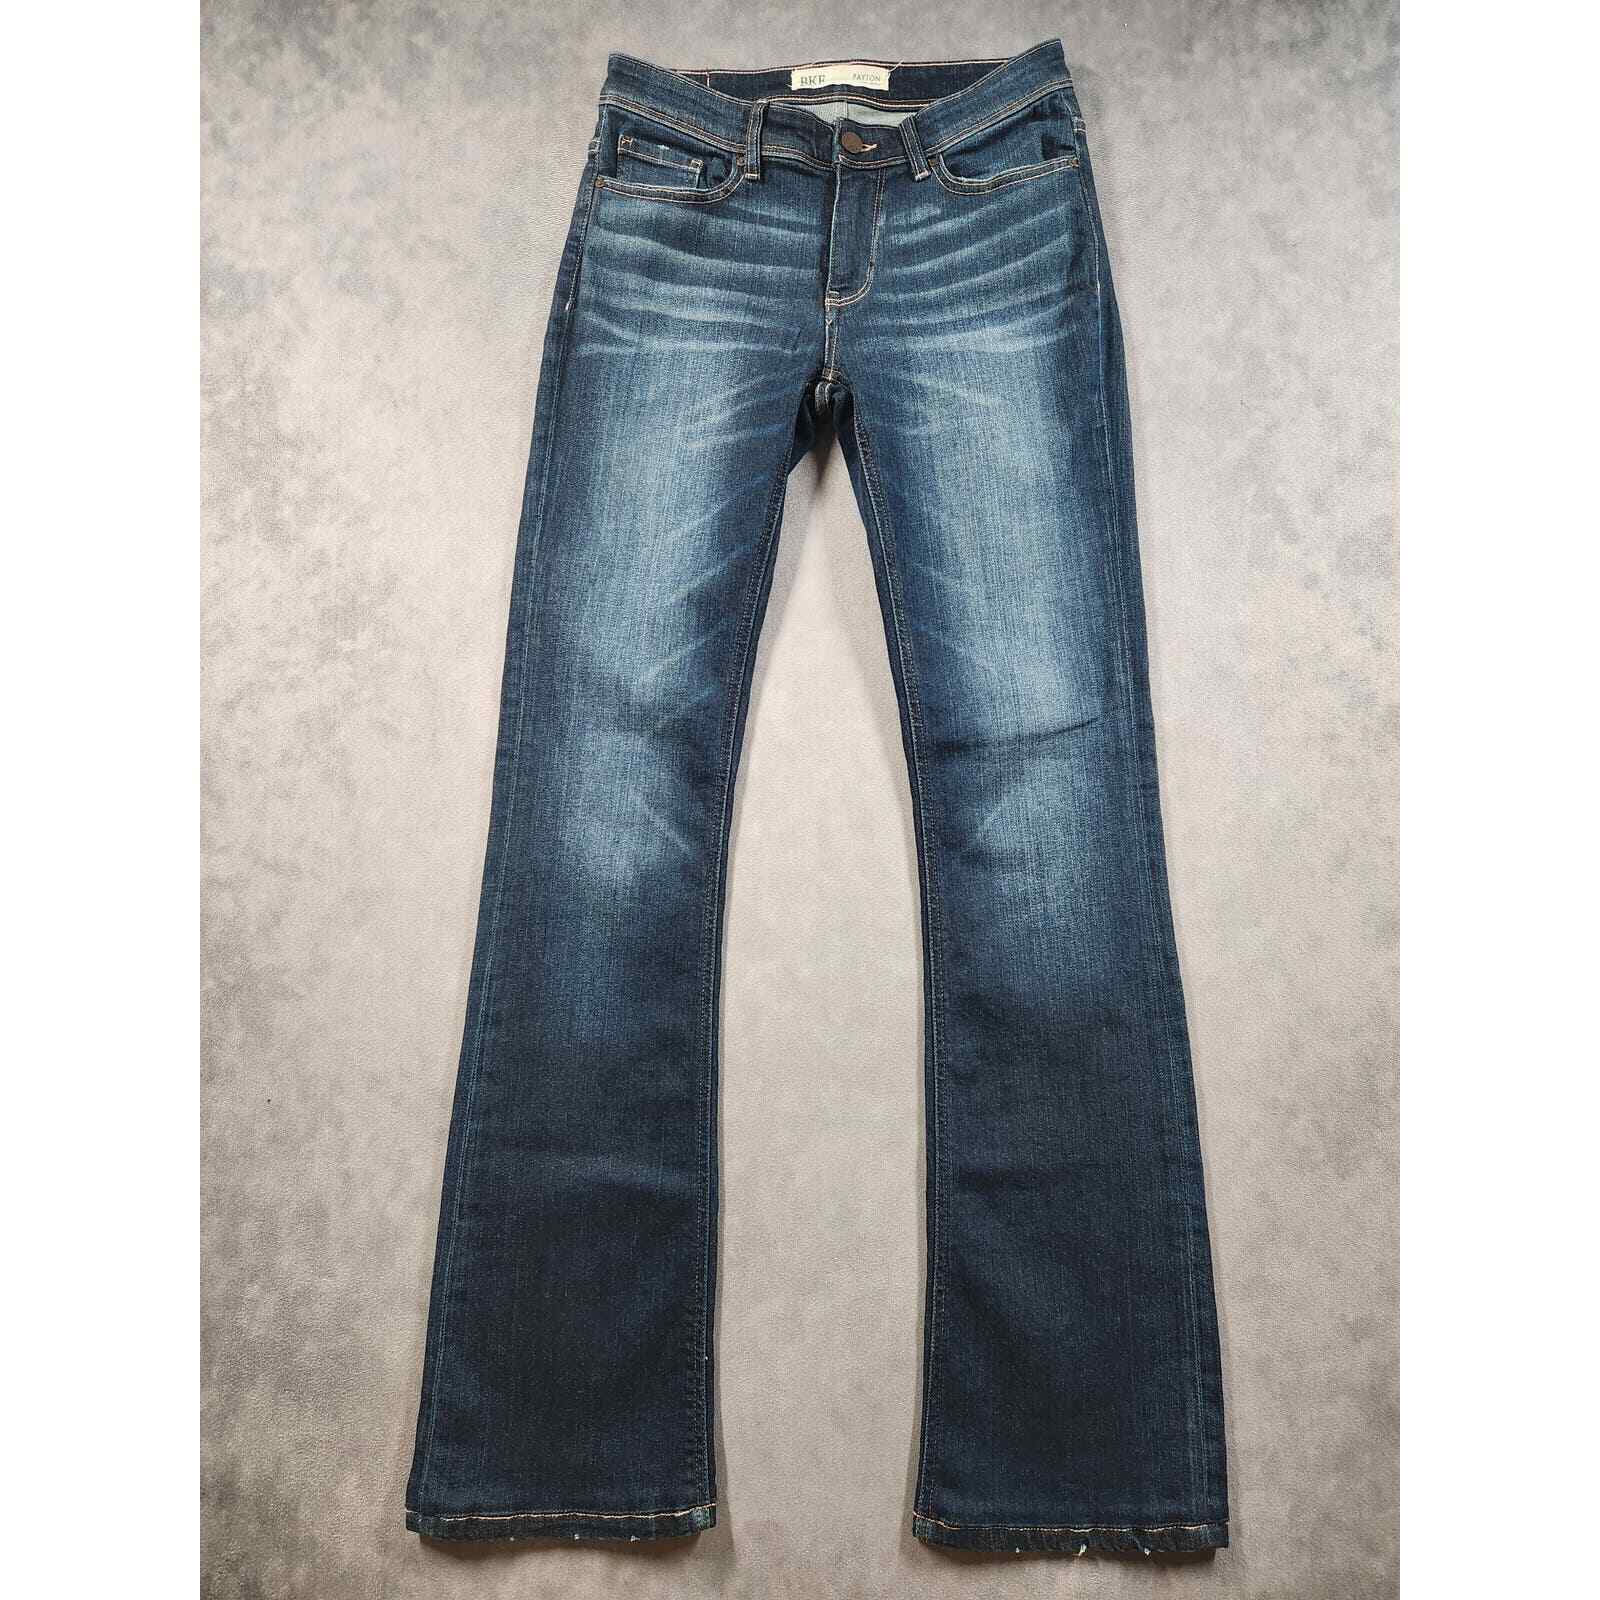 BKE Jeans Payton Mid Rise Boot Cut Womens Size 26 W 35.5 L Blue (26x33 Actual)